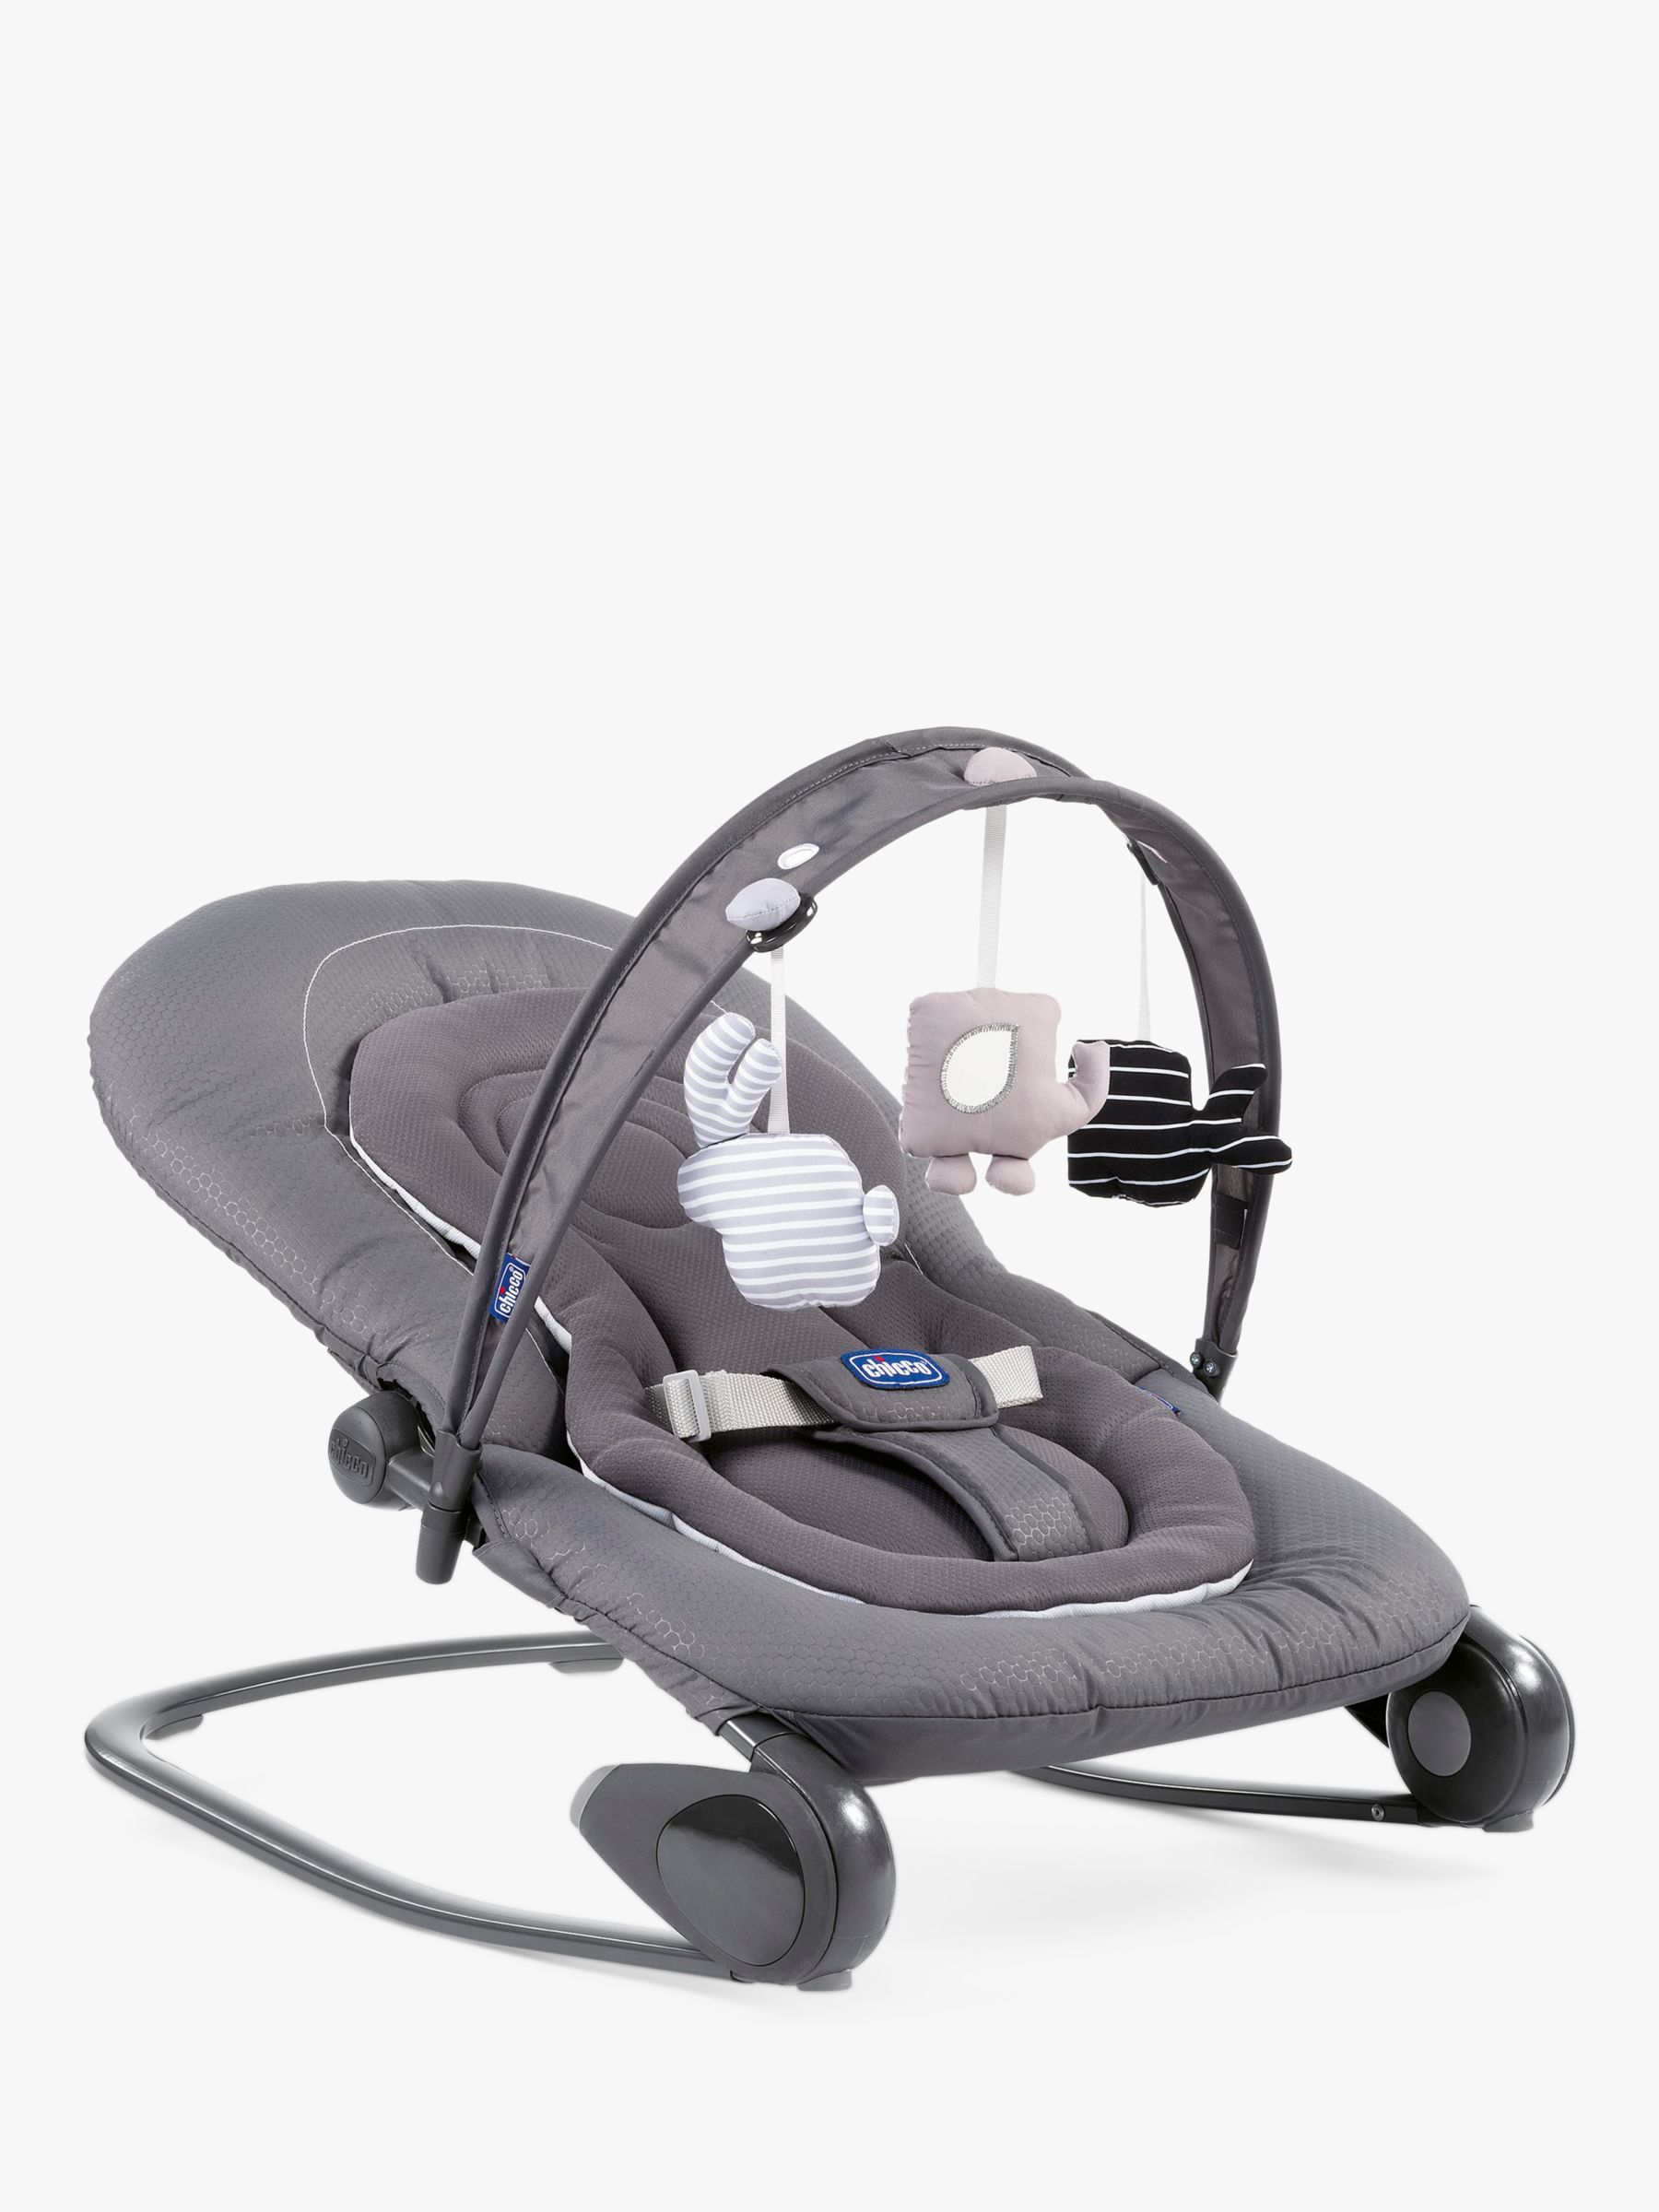 grey baby rocker chair